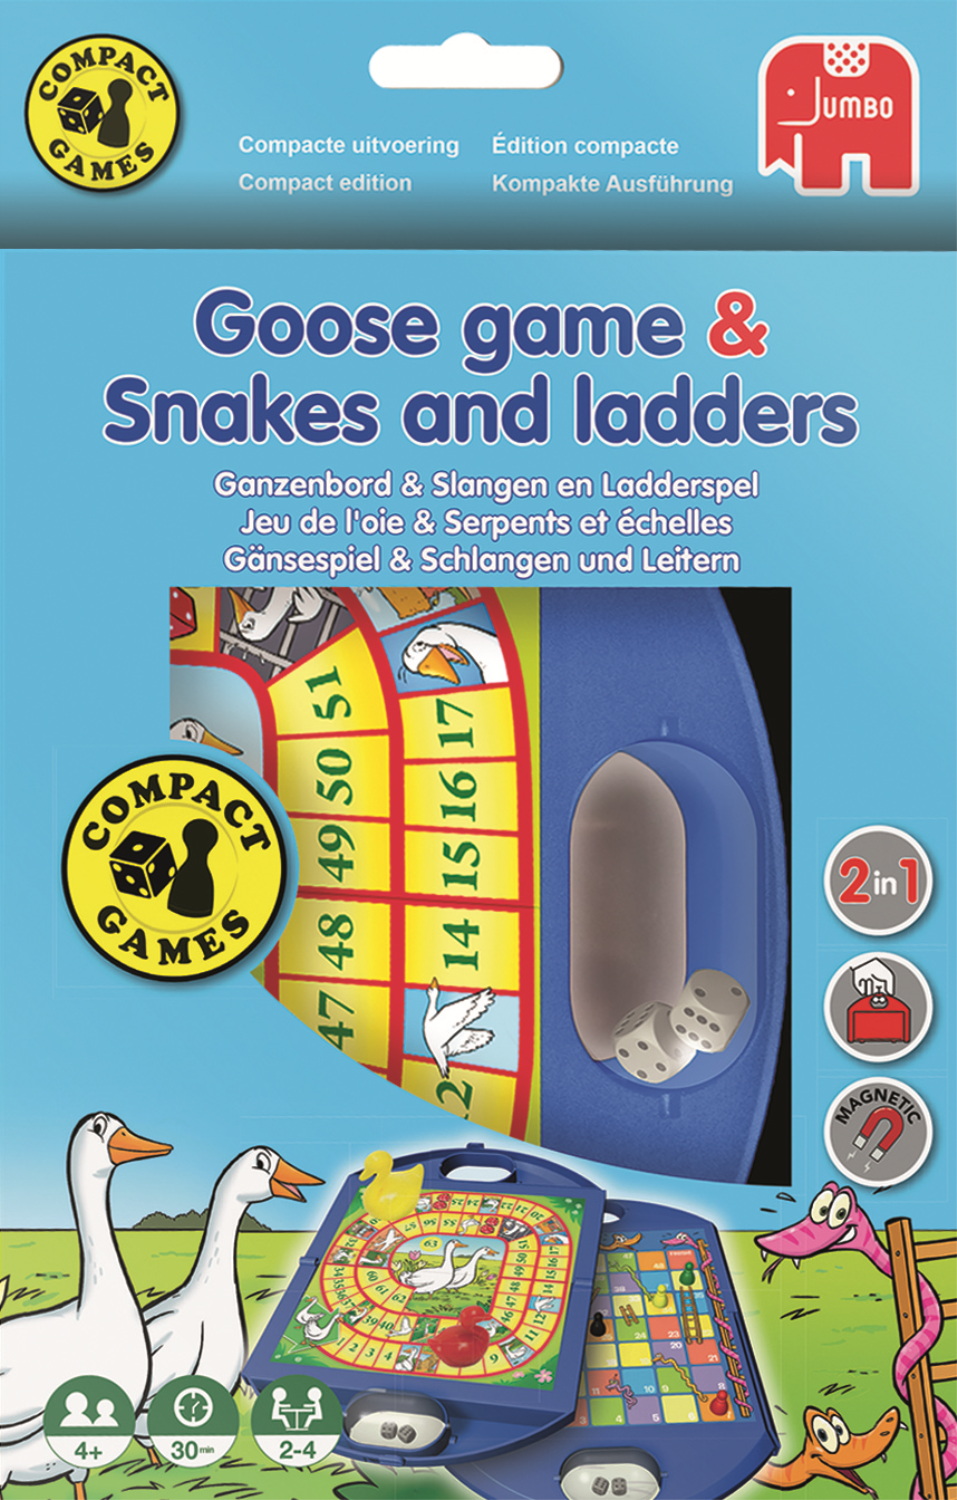 Jogo de Tabuleiro JUMBO Goose Game & Snakes and Ladders Travel